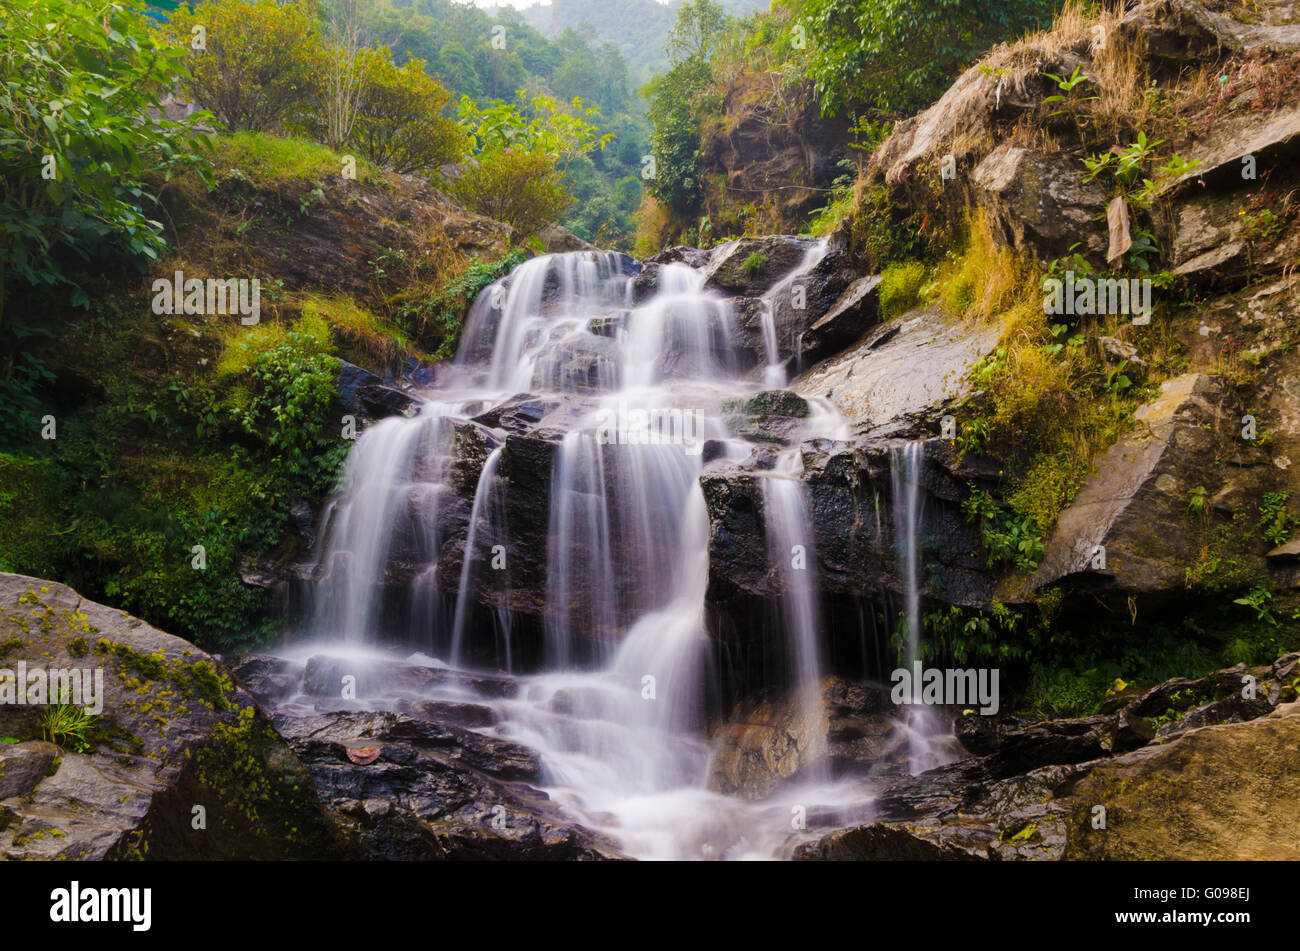 A portion of Chunnu Summer Falls at Rock Garden, Darjeeling, West Bengal, India Stock Photo